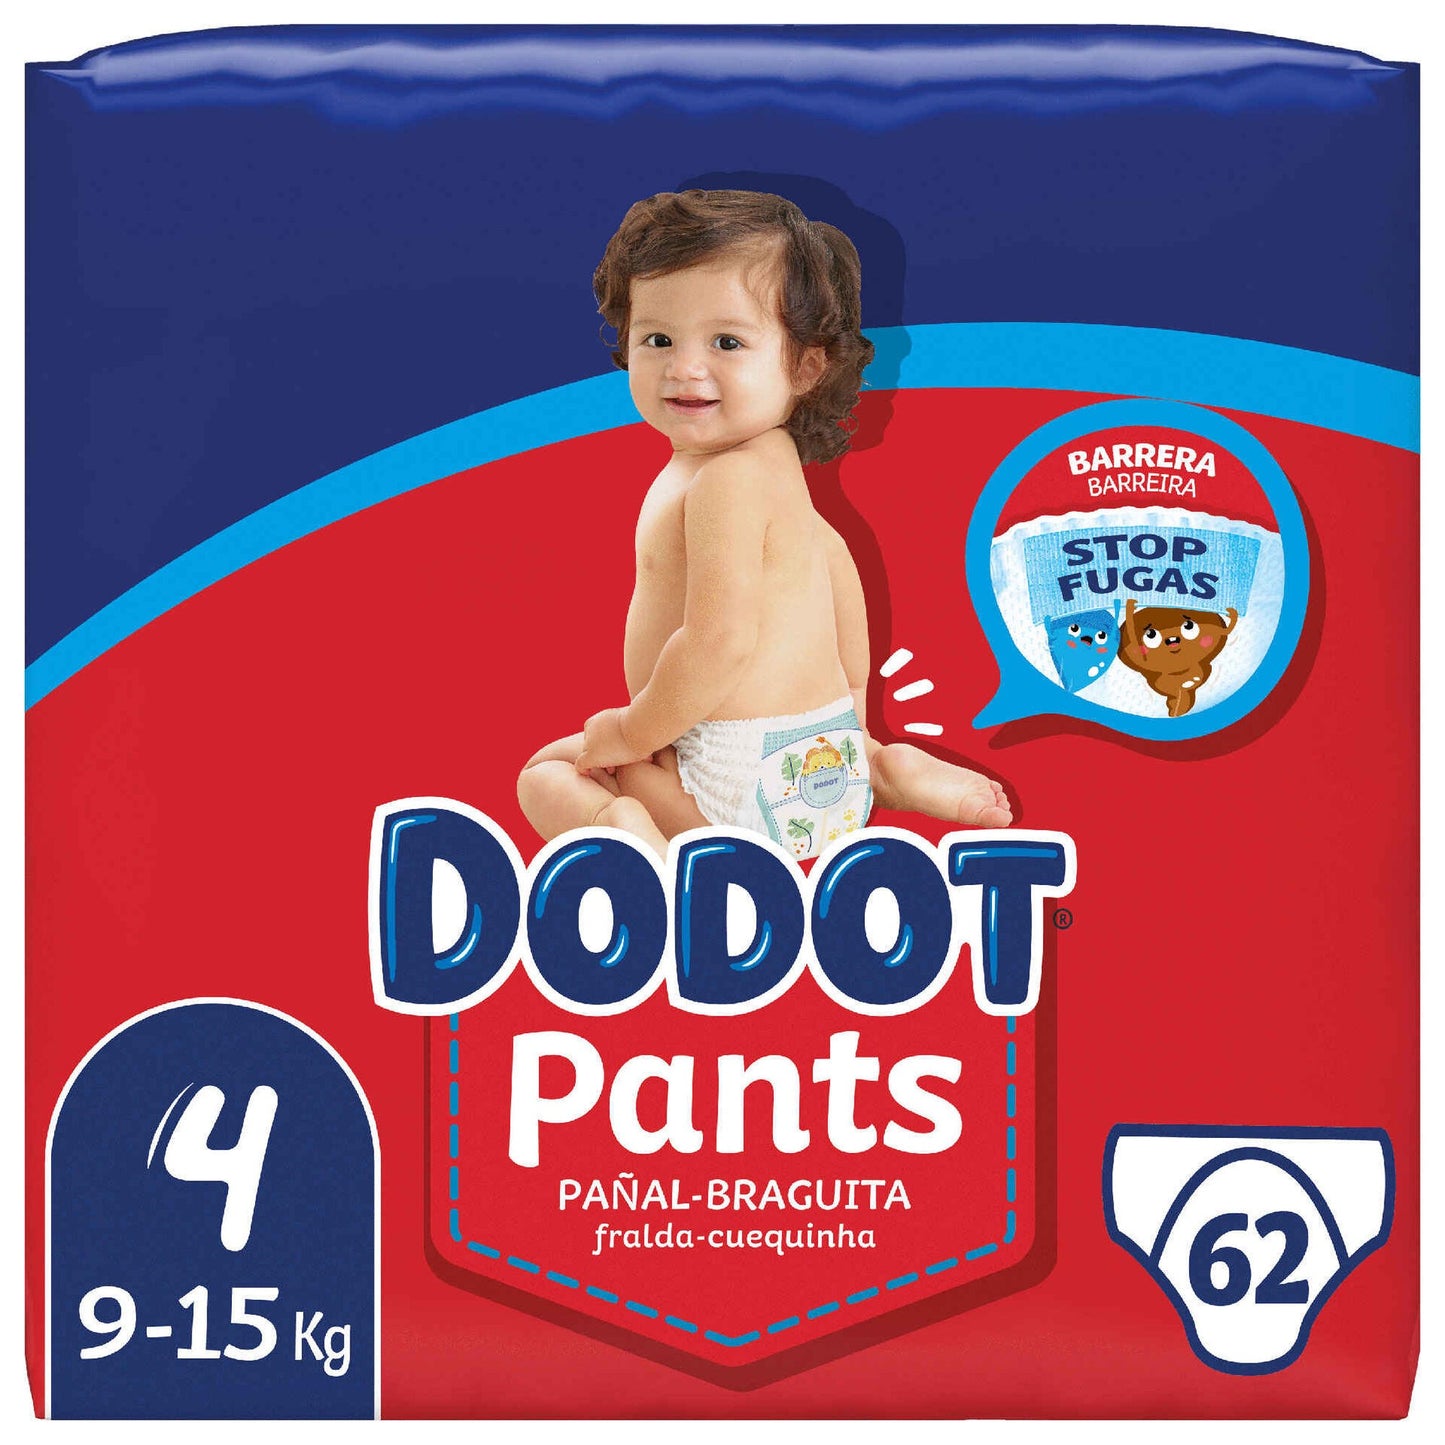 DODOT Diapers Underwear Pants 9-15kg T4